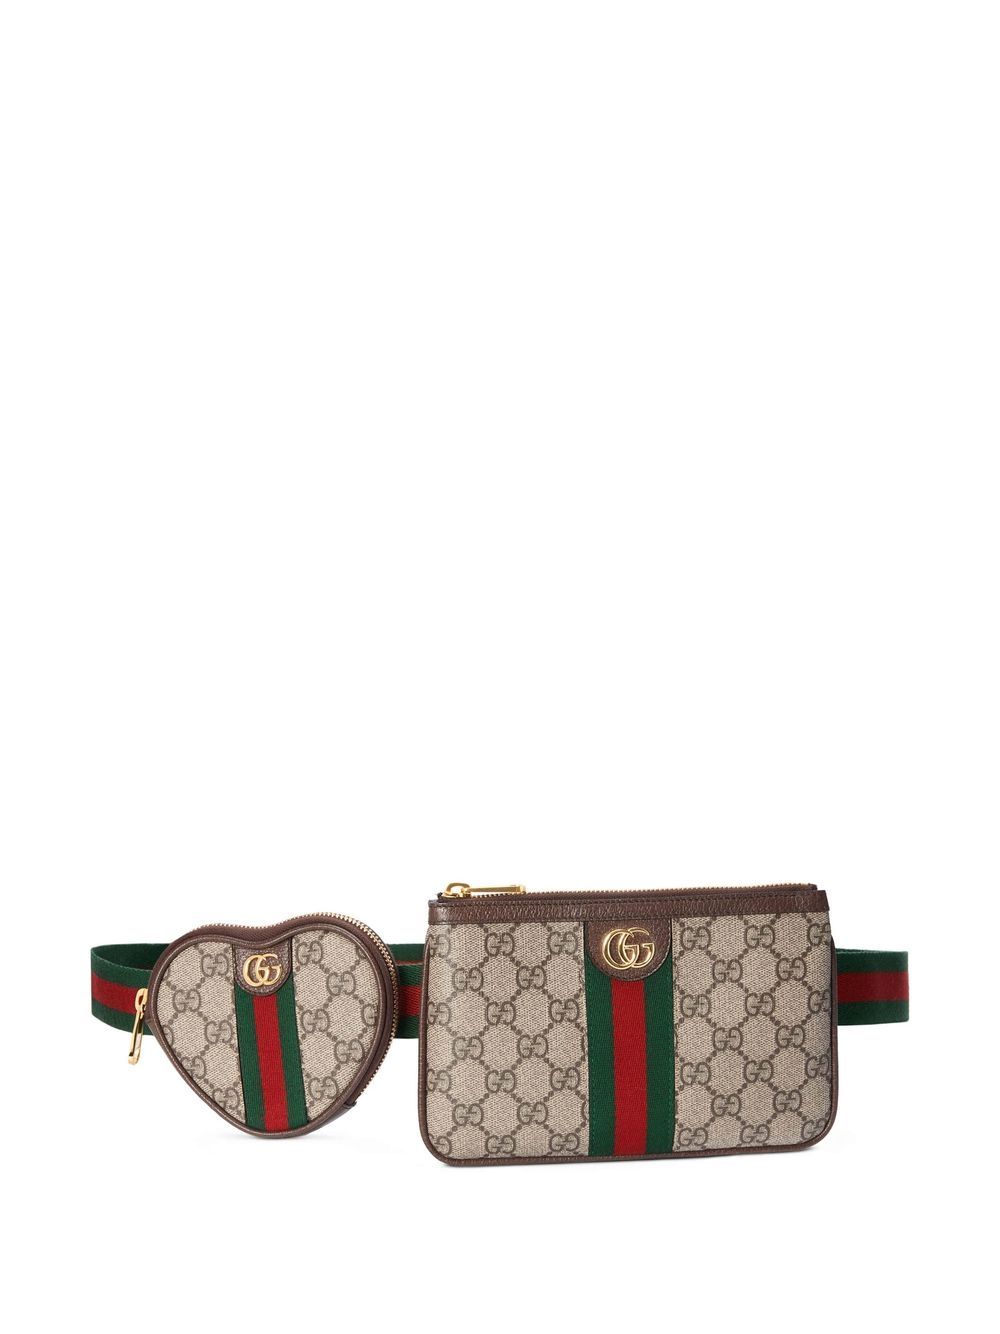 Gucci Ophidia GG Supreme belt bag - Brown